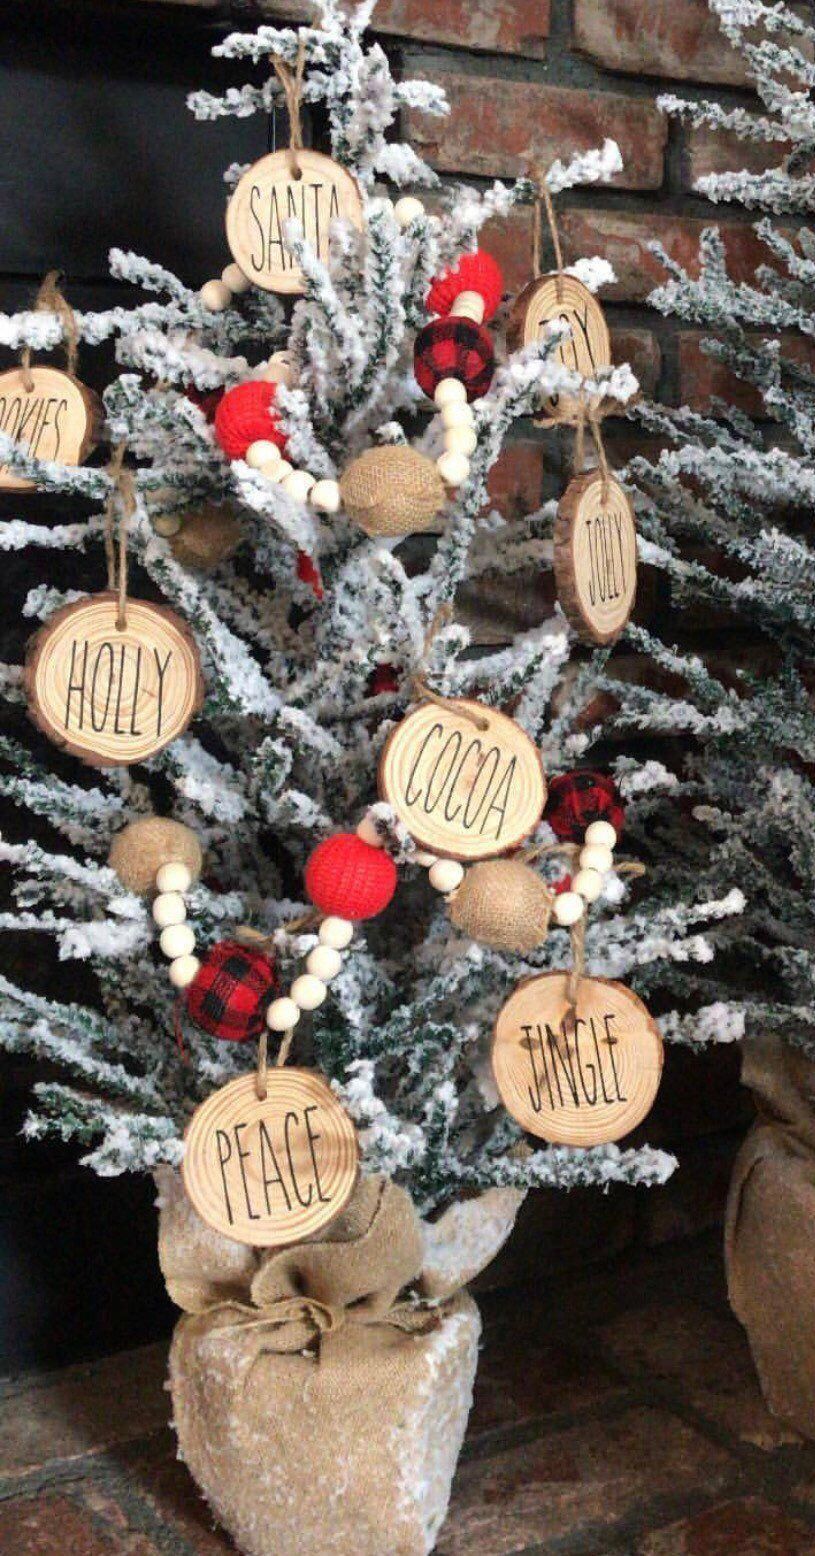 Rae dunn inspired christmas ornaments, gift, wood slice ornaments - Rae dunn inspired christmas ornaments, gift, wood slice ornaments -   18 diy Christmas 2020 ideas